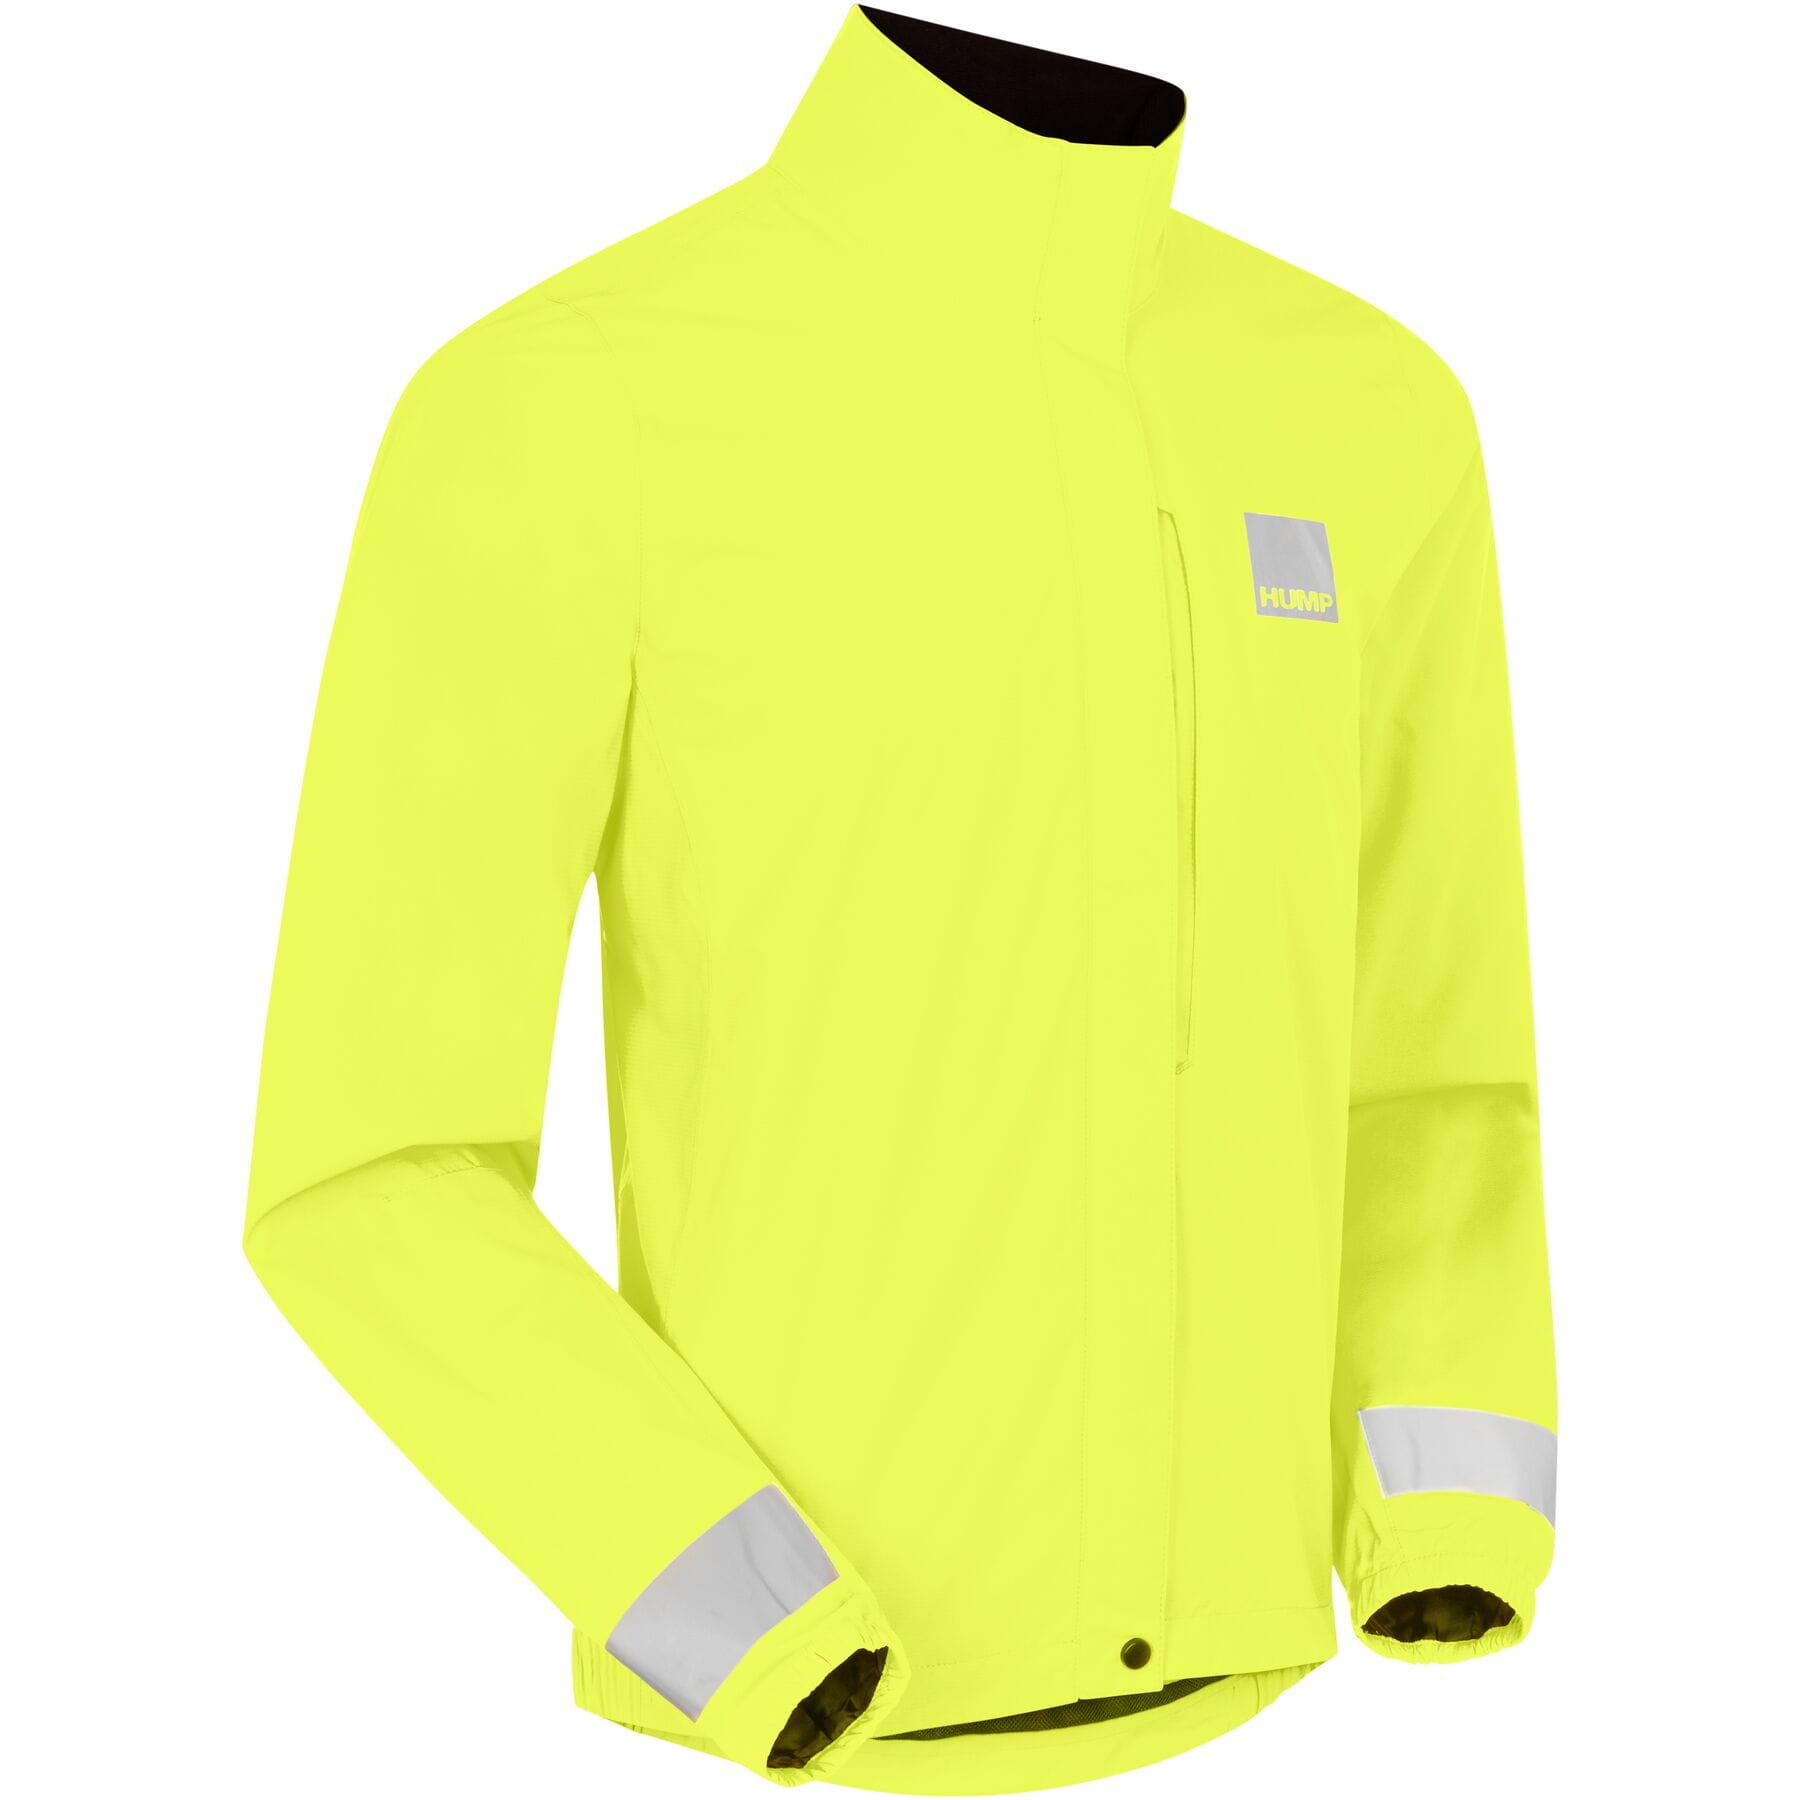 HUMP Strobe Youth Waterproof Jacket, Safety Yellow - Age 11-12 2/2